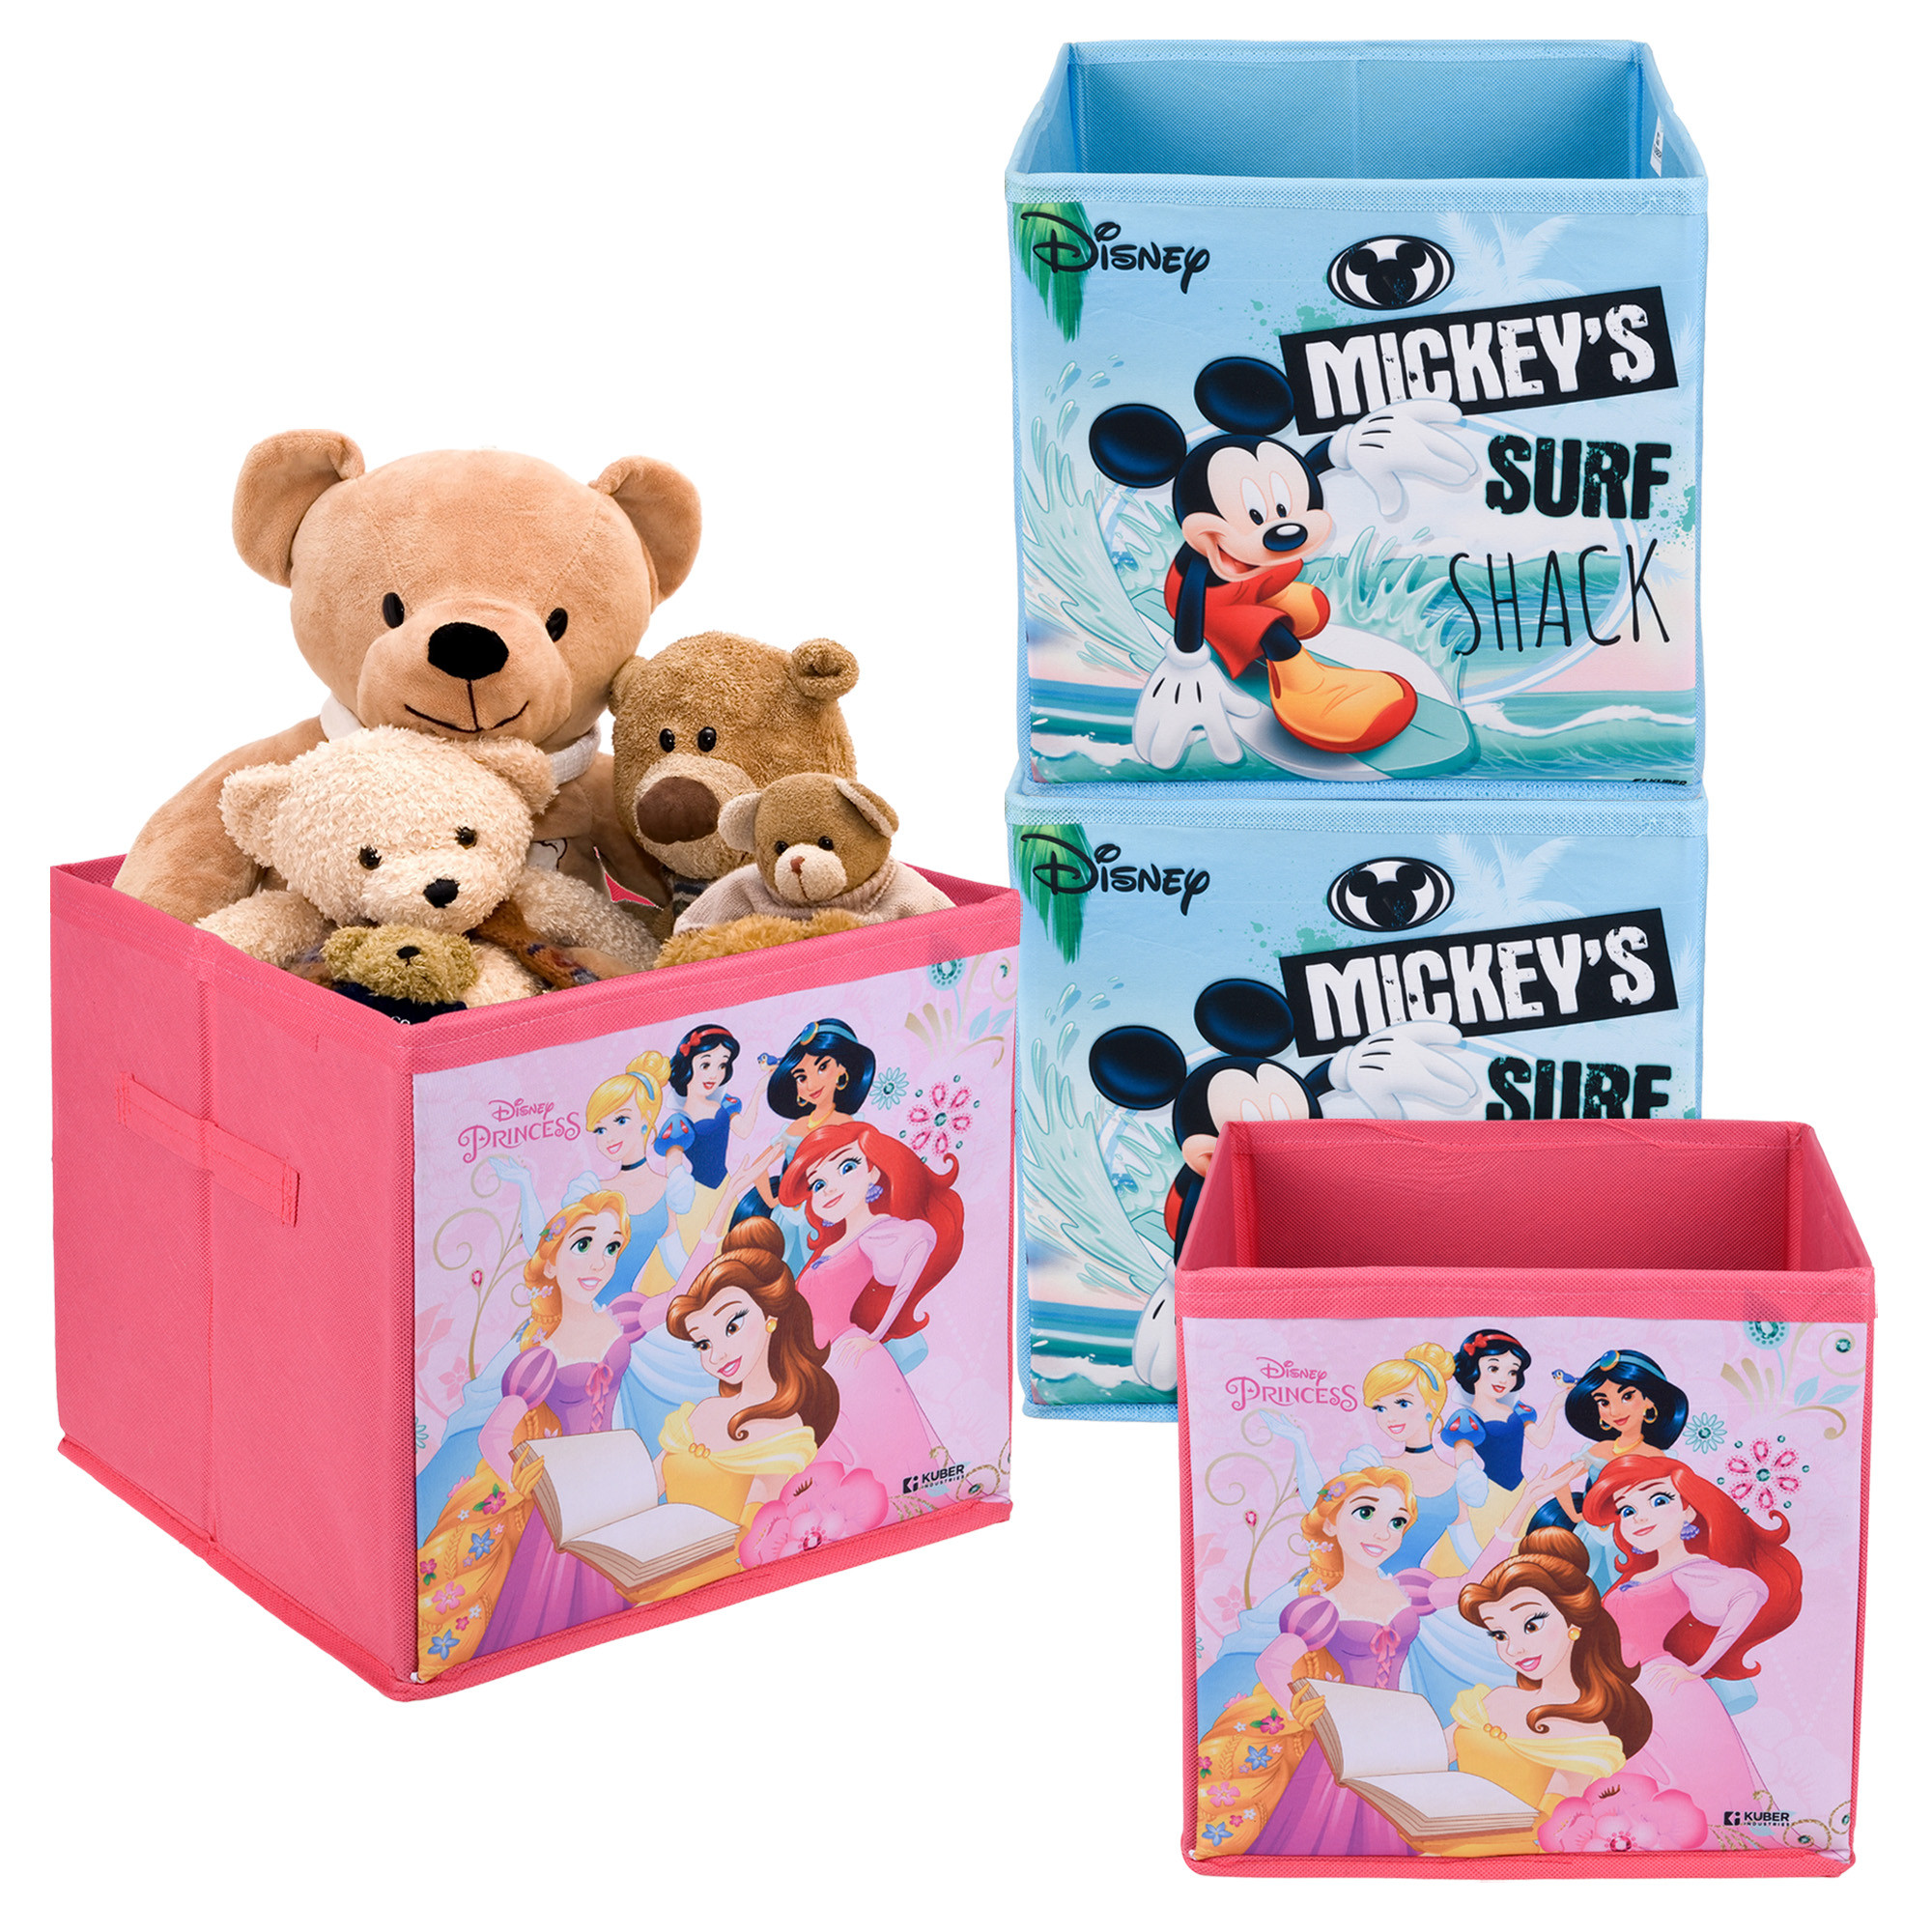 Kuber Industries Storage Box | Square Toy Storage Box | Wardrobe Organizer for Clothes-Books-Toys-Stationary | Drawer Organizer Box with Handle | Disney-Print | Pink & Sky Blue